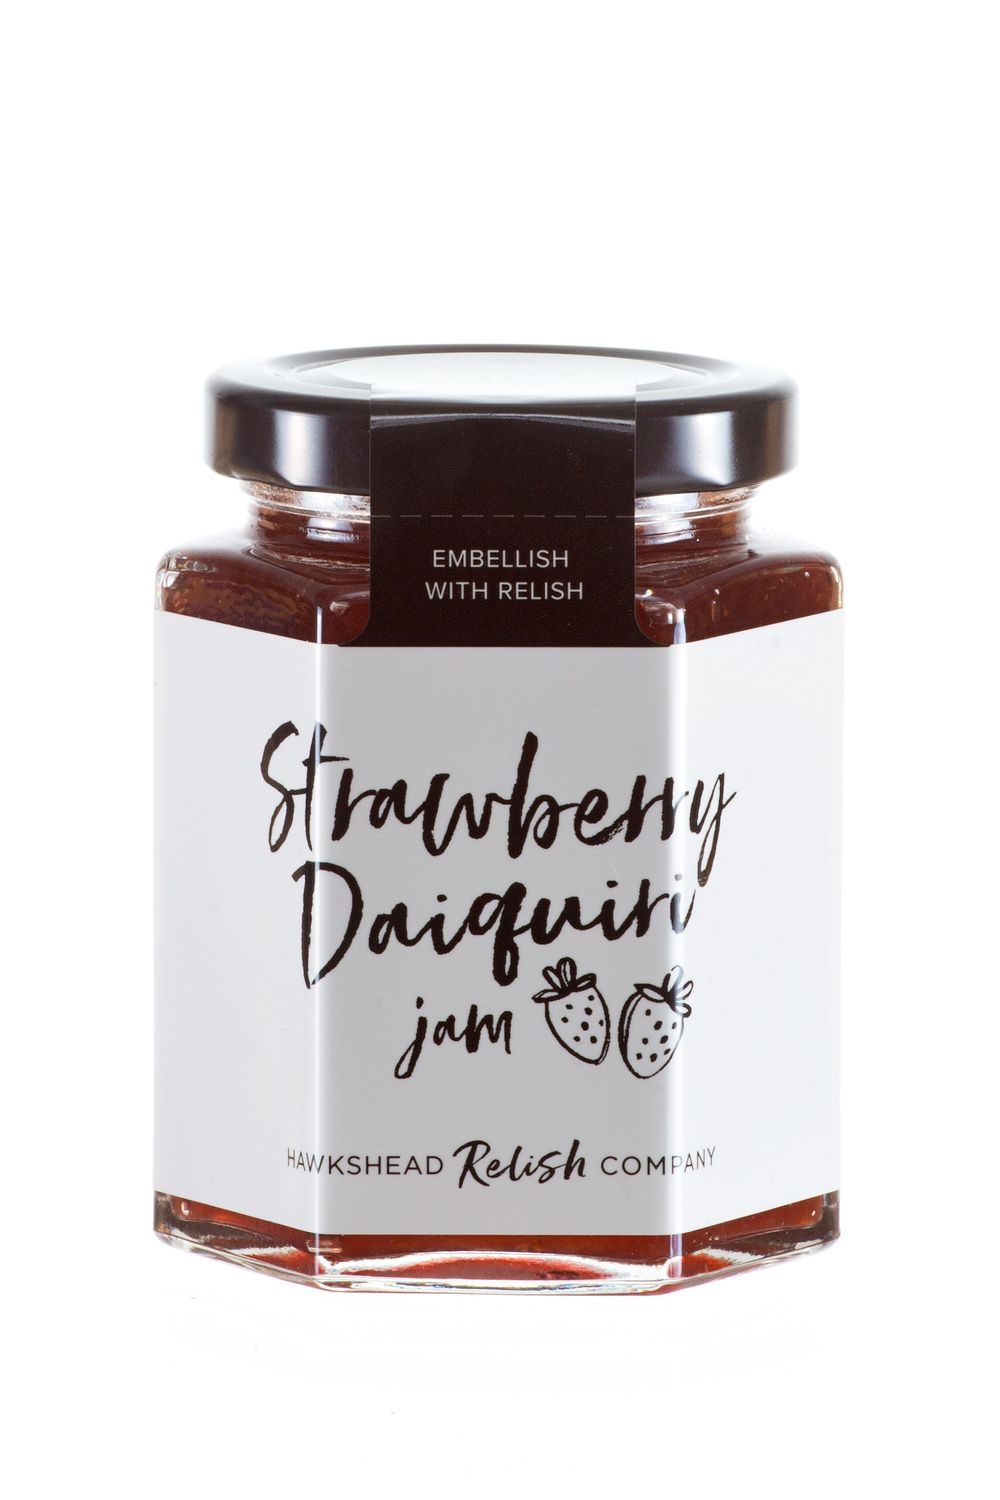 Hawkshead Relish Co. Strawberry Daiquiri Jam